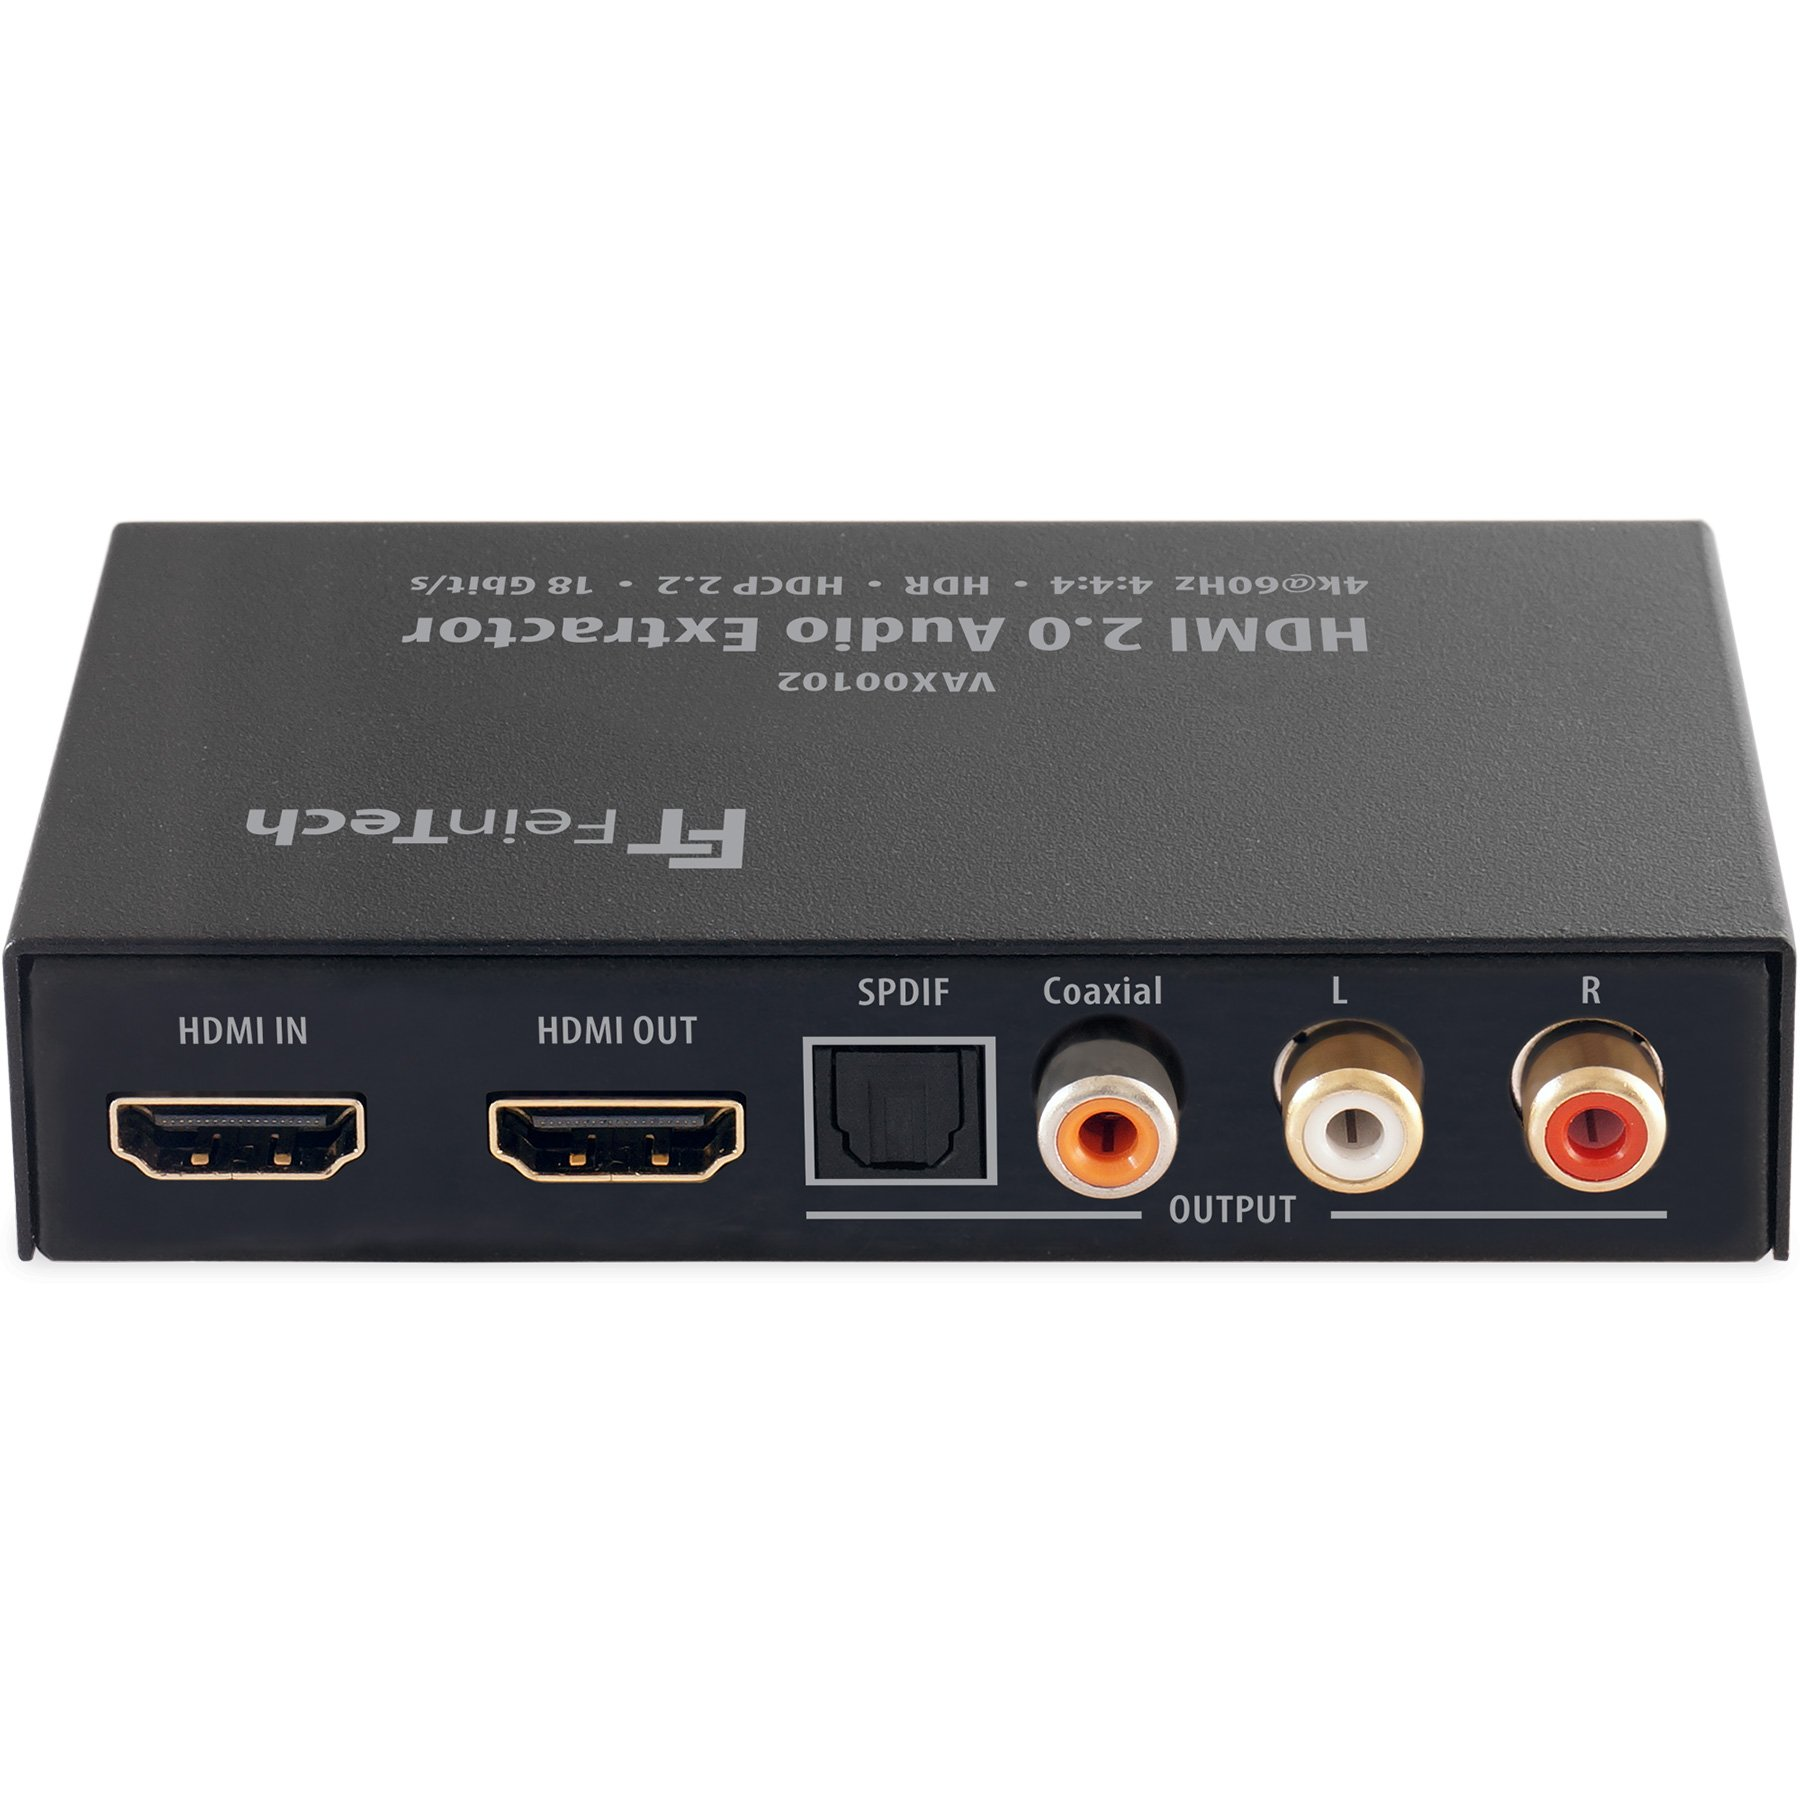 HDMI Audio 2.0 Extractor ARC Audio HDMI FEINTECH mit Extractor